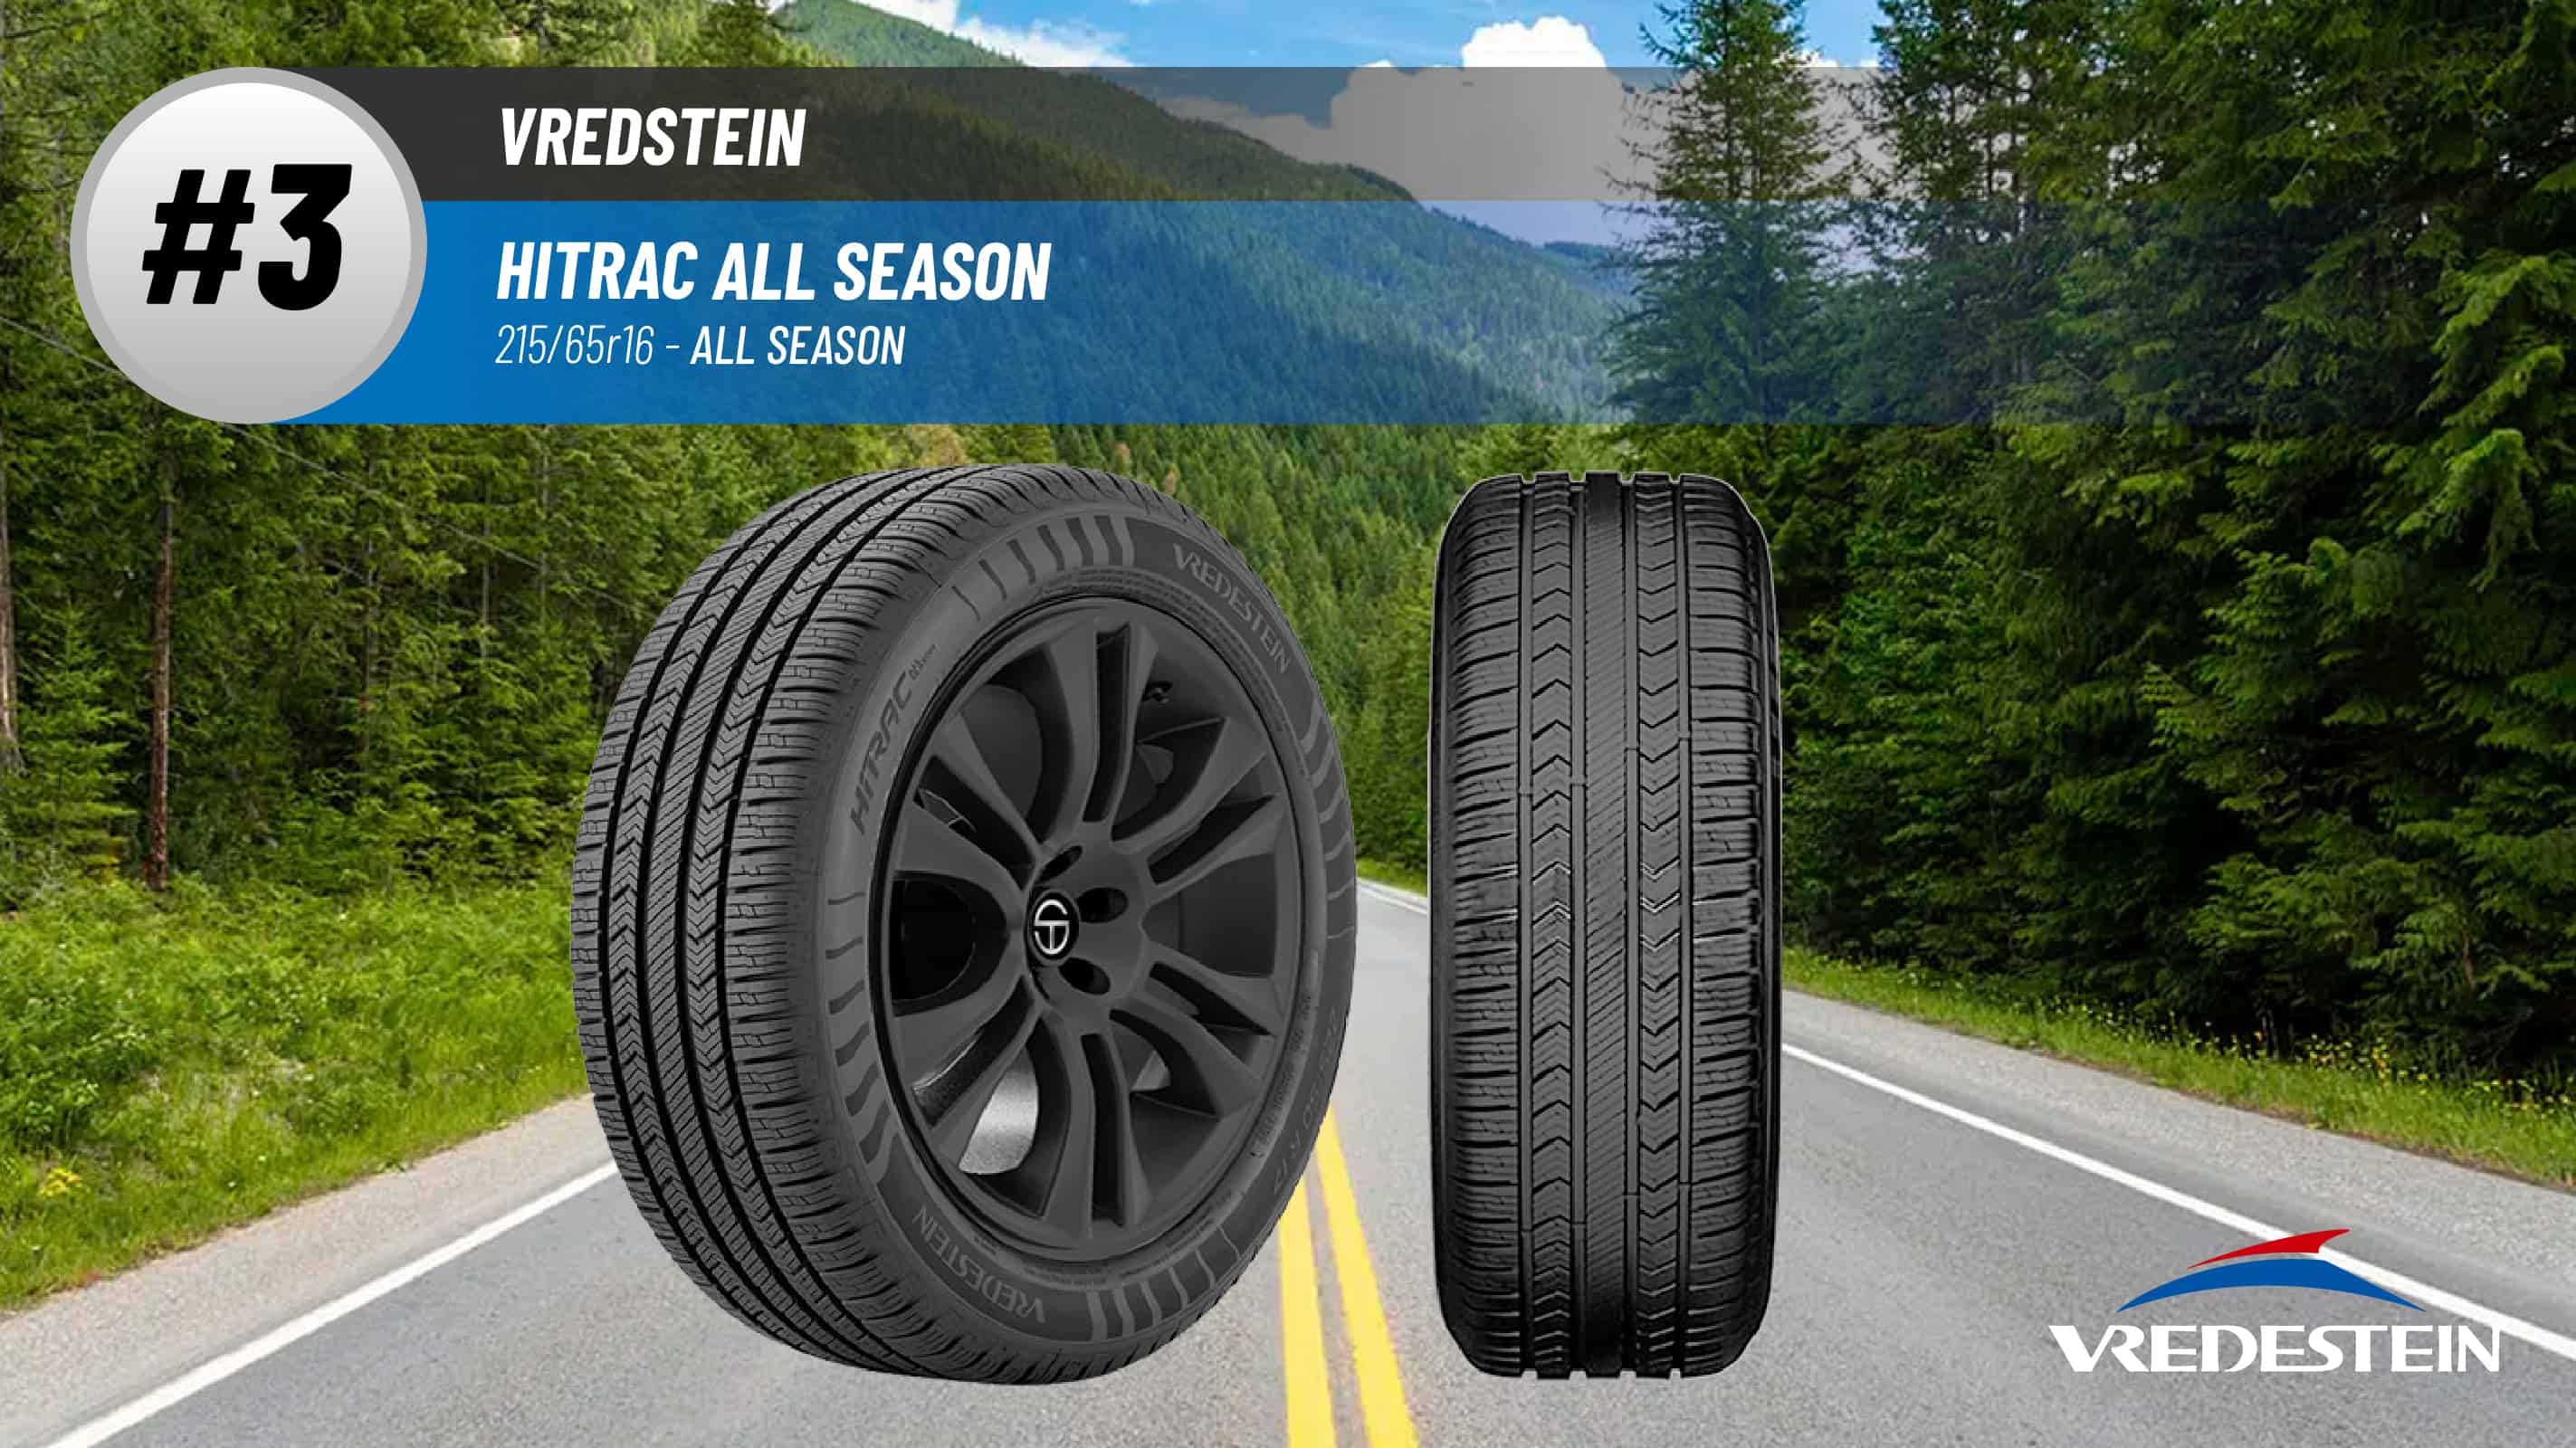 Top #3 All Season Tires: Vredstein Hitrac All Season – best 215/65R16